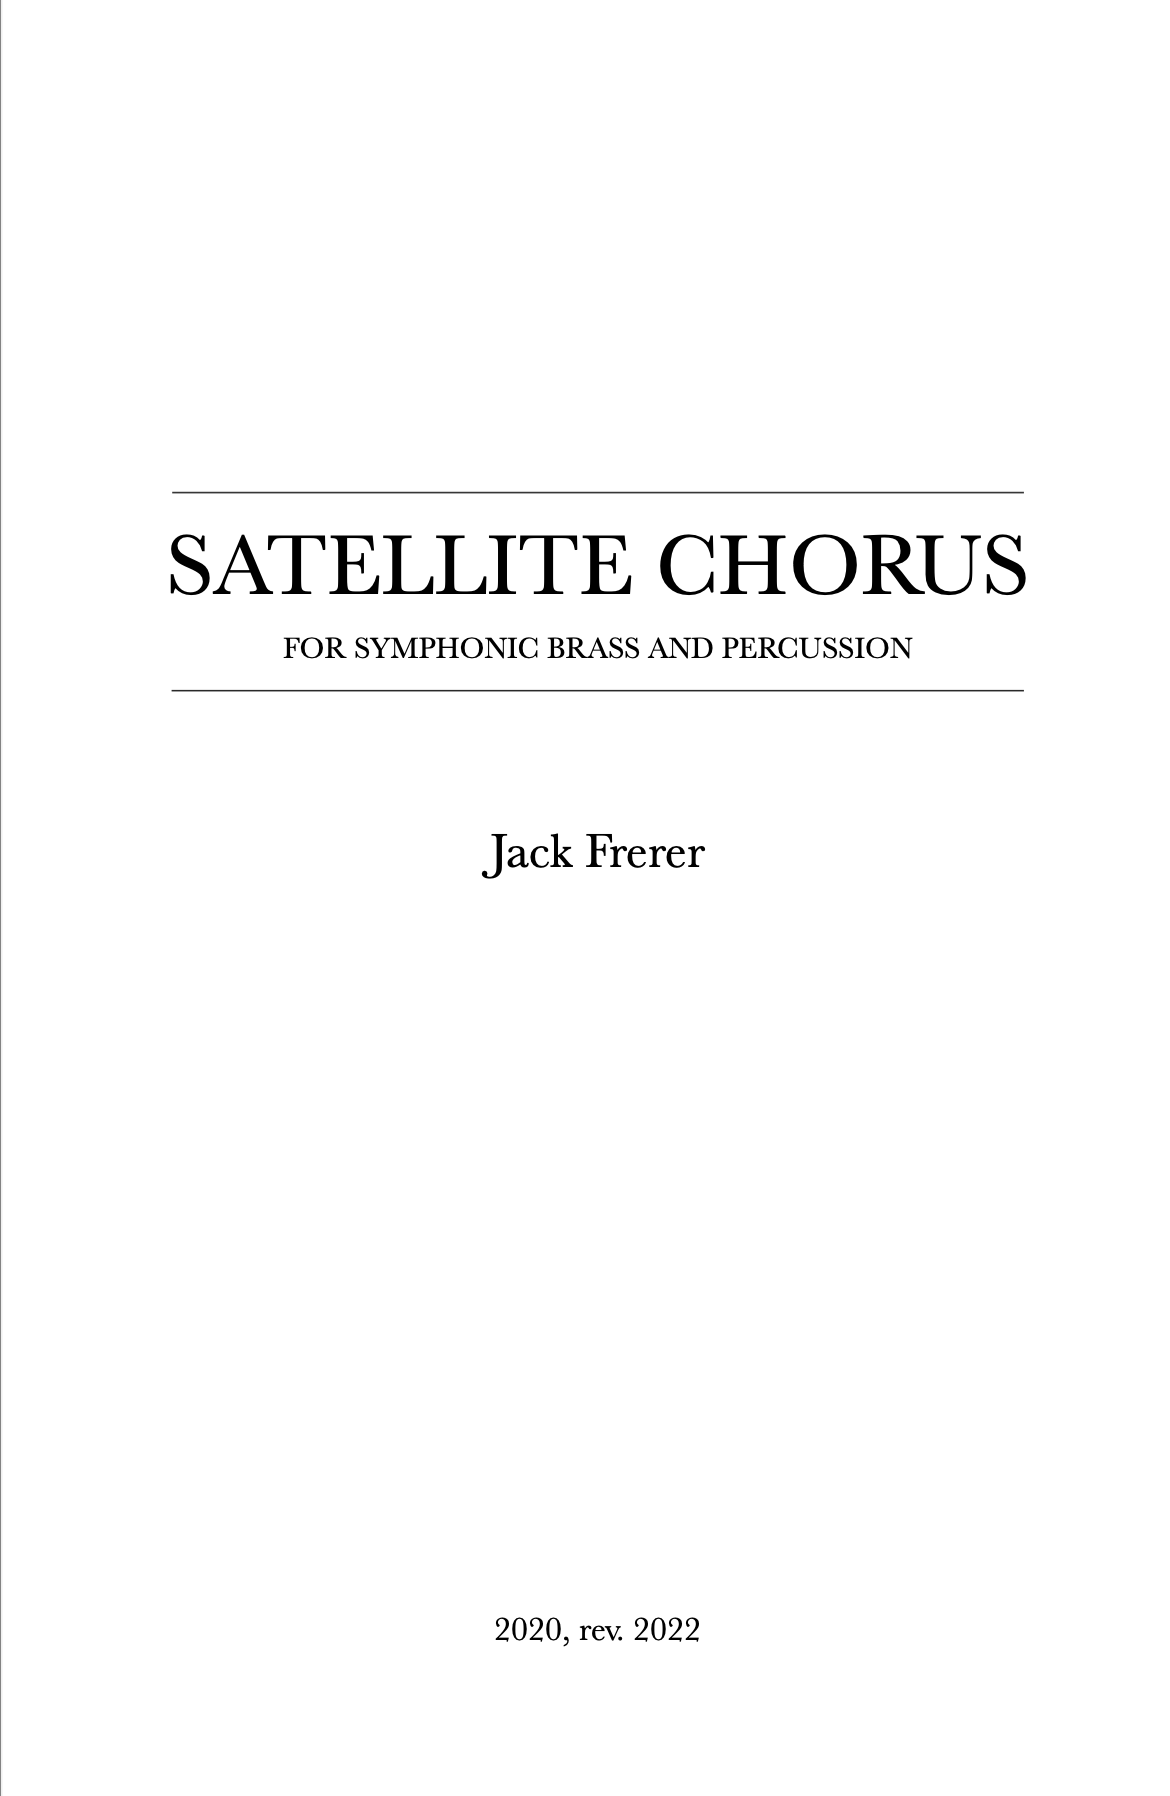 Satellite Chorus by Jack Frerer